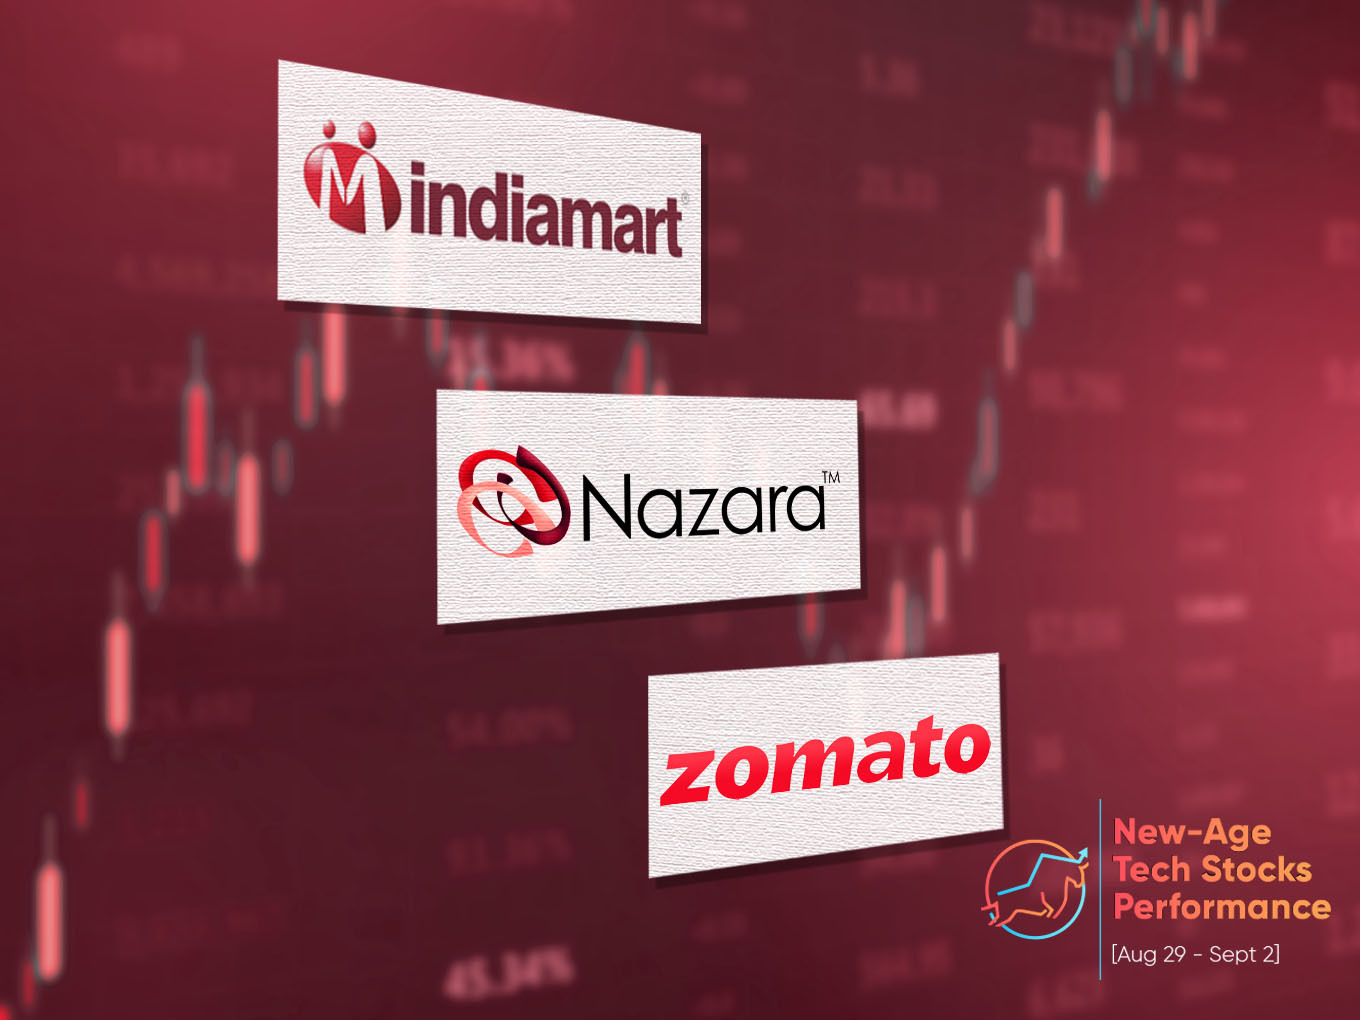 New-Age Tech Stocks: IndiaMART, Nazara Gain In Another Volatile Week